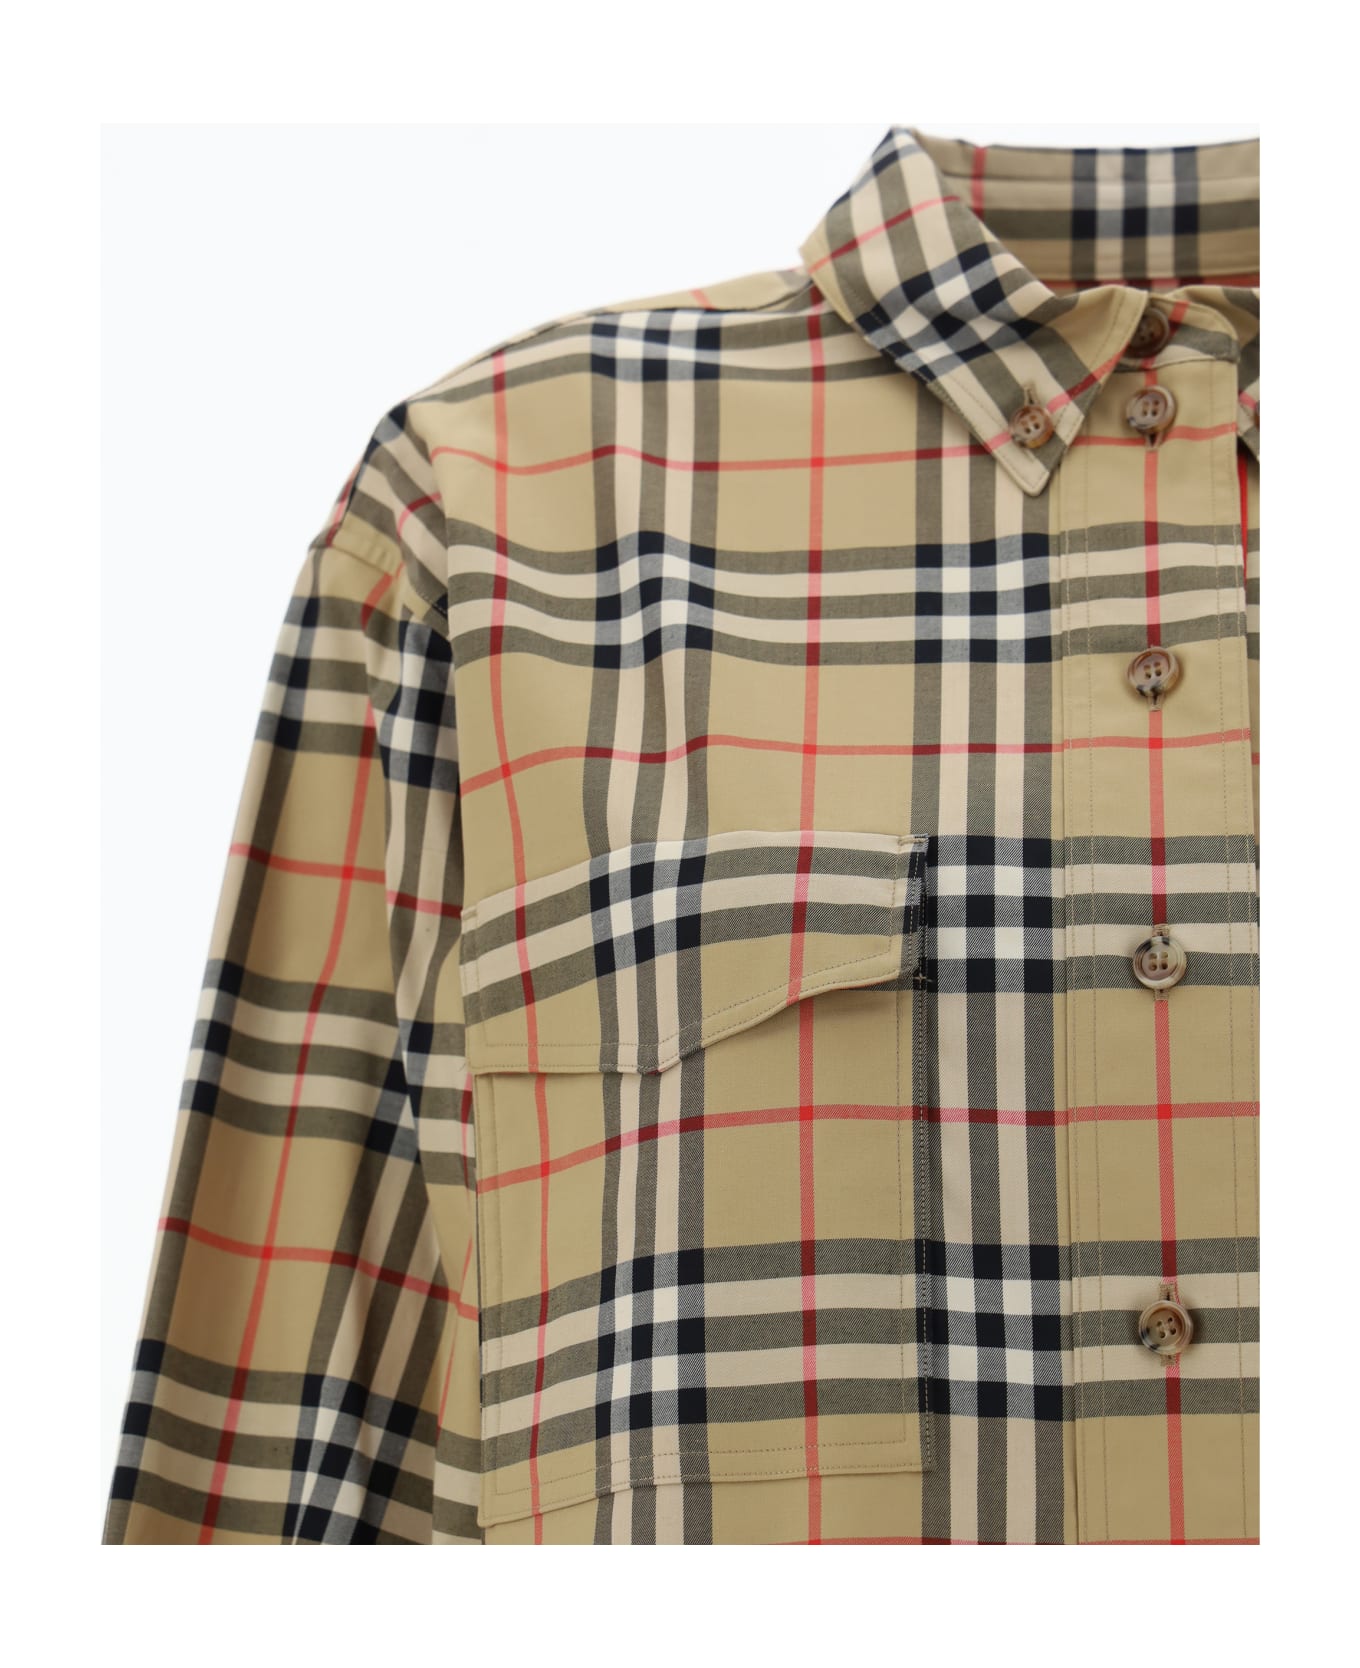 Burberry Turnstone Shirt - Beige